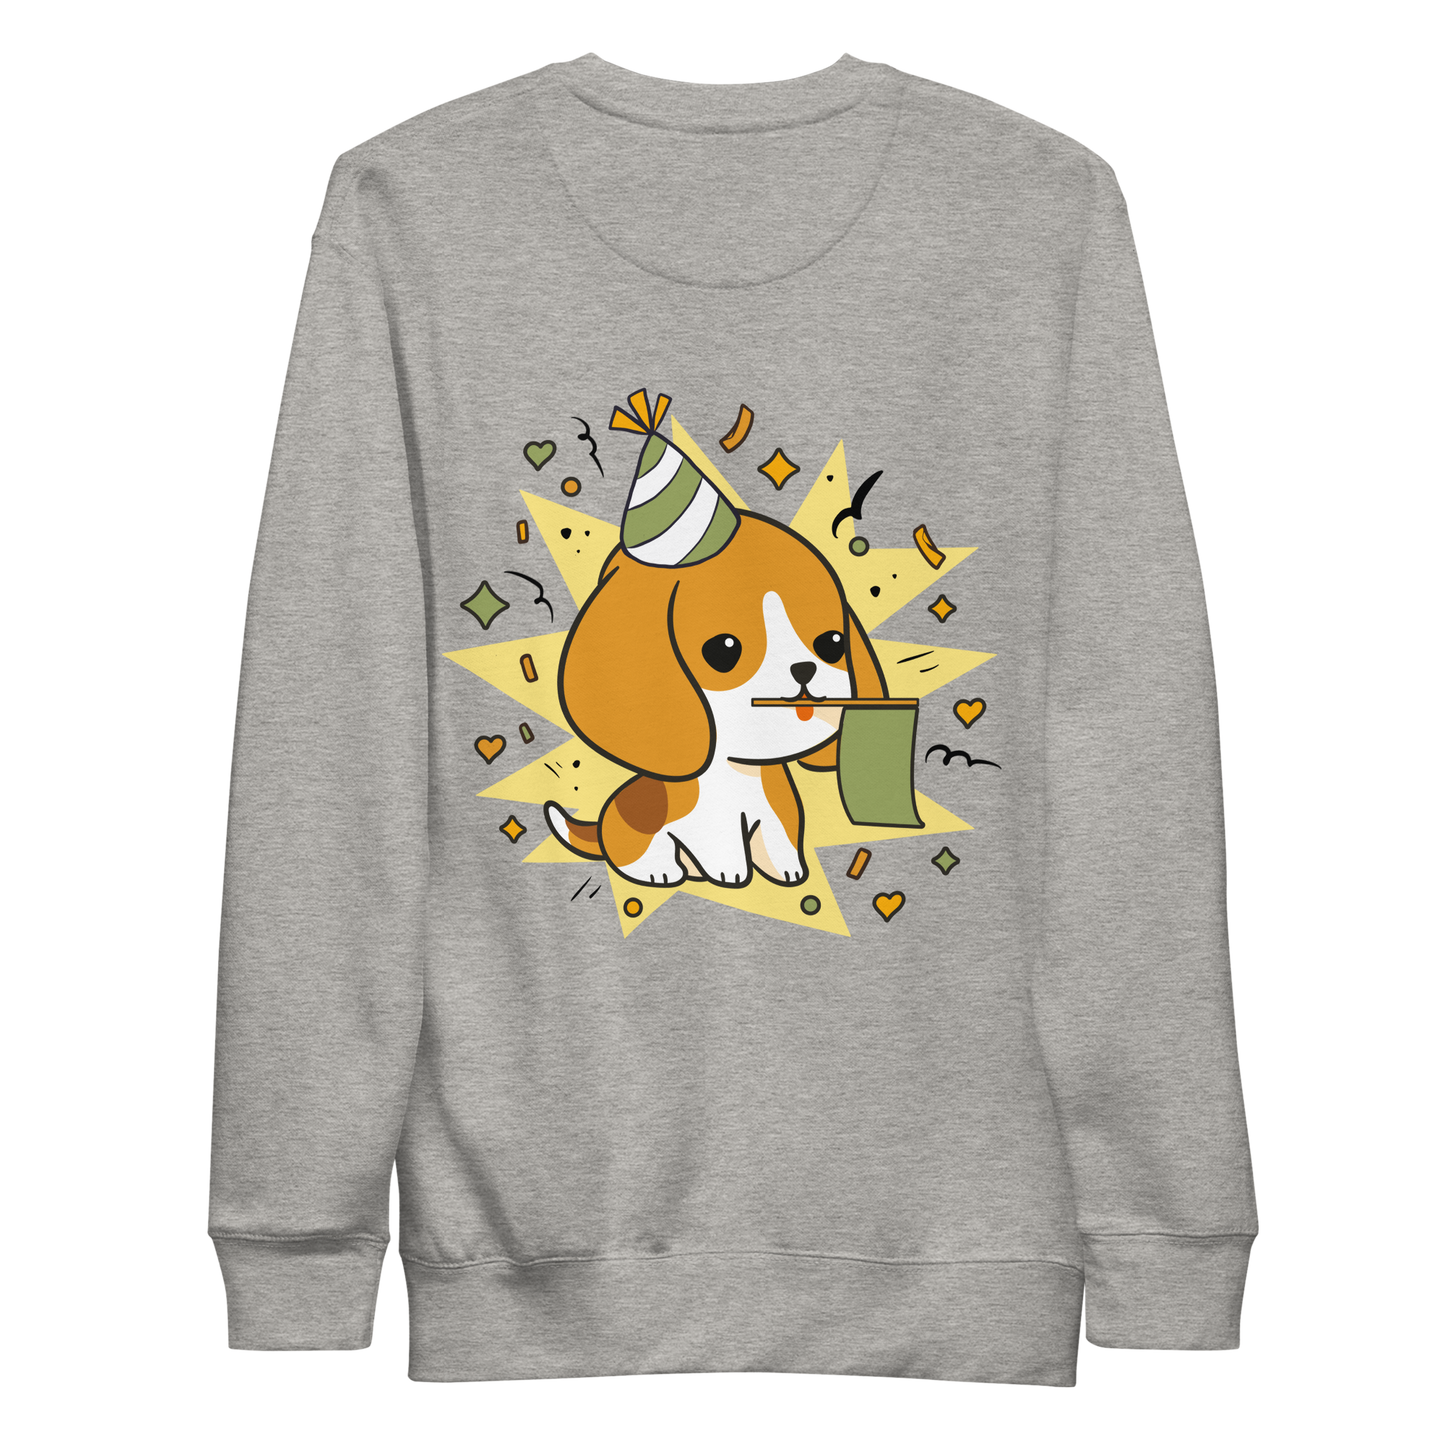 Cute celebrating beagle dog | Unisex Premium Sweatshirt - F&B